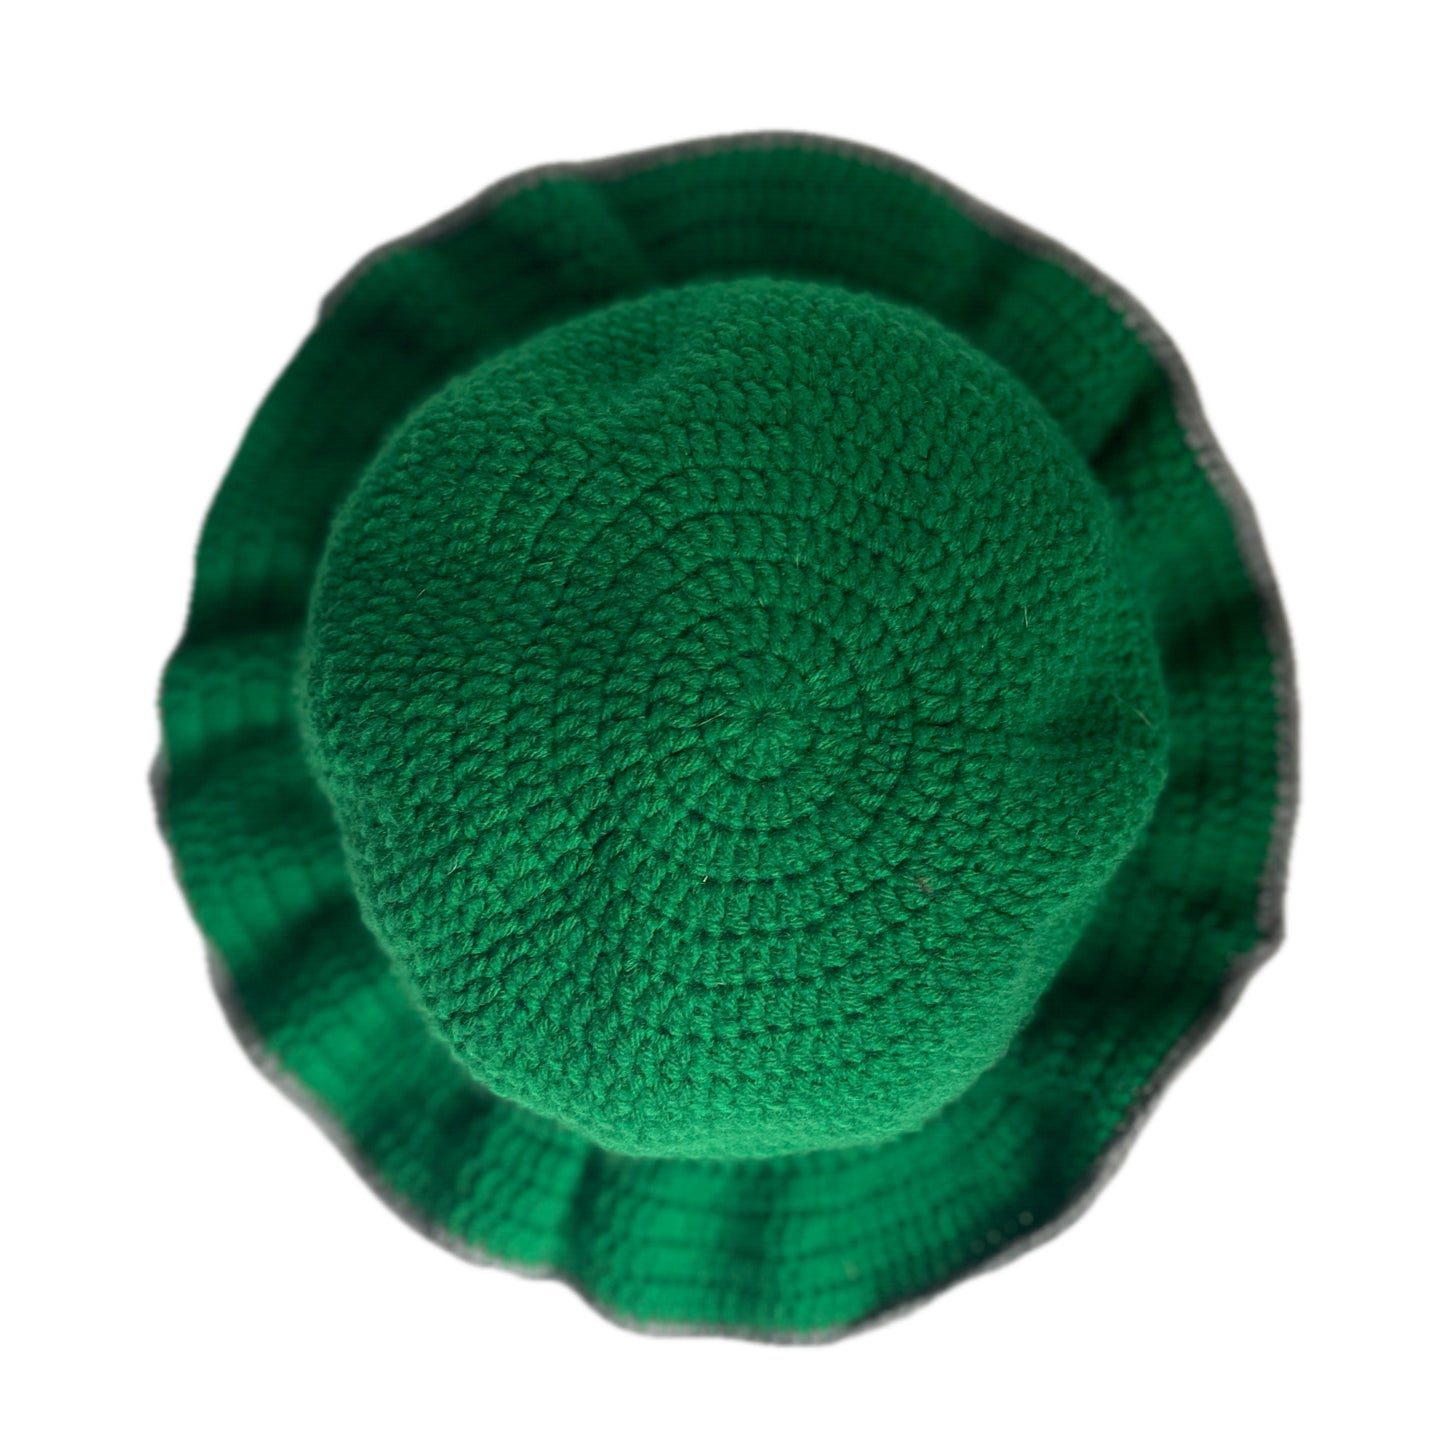 Shopdigitalgirl | Crochet Hats | Green Bucket Hat